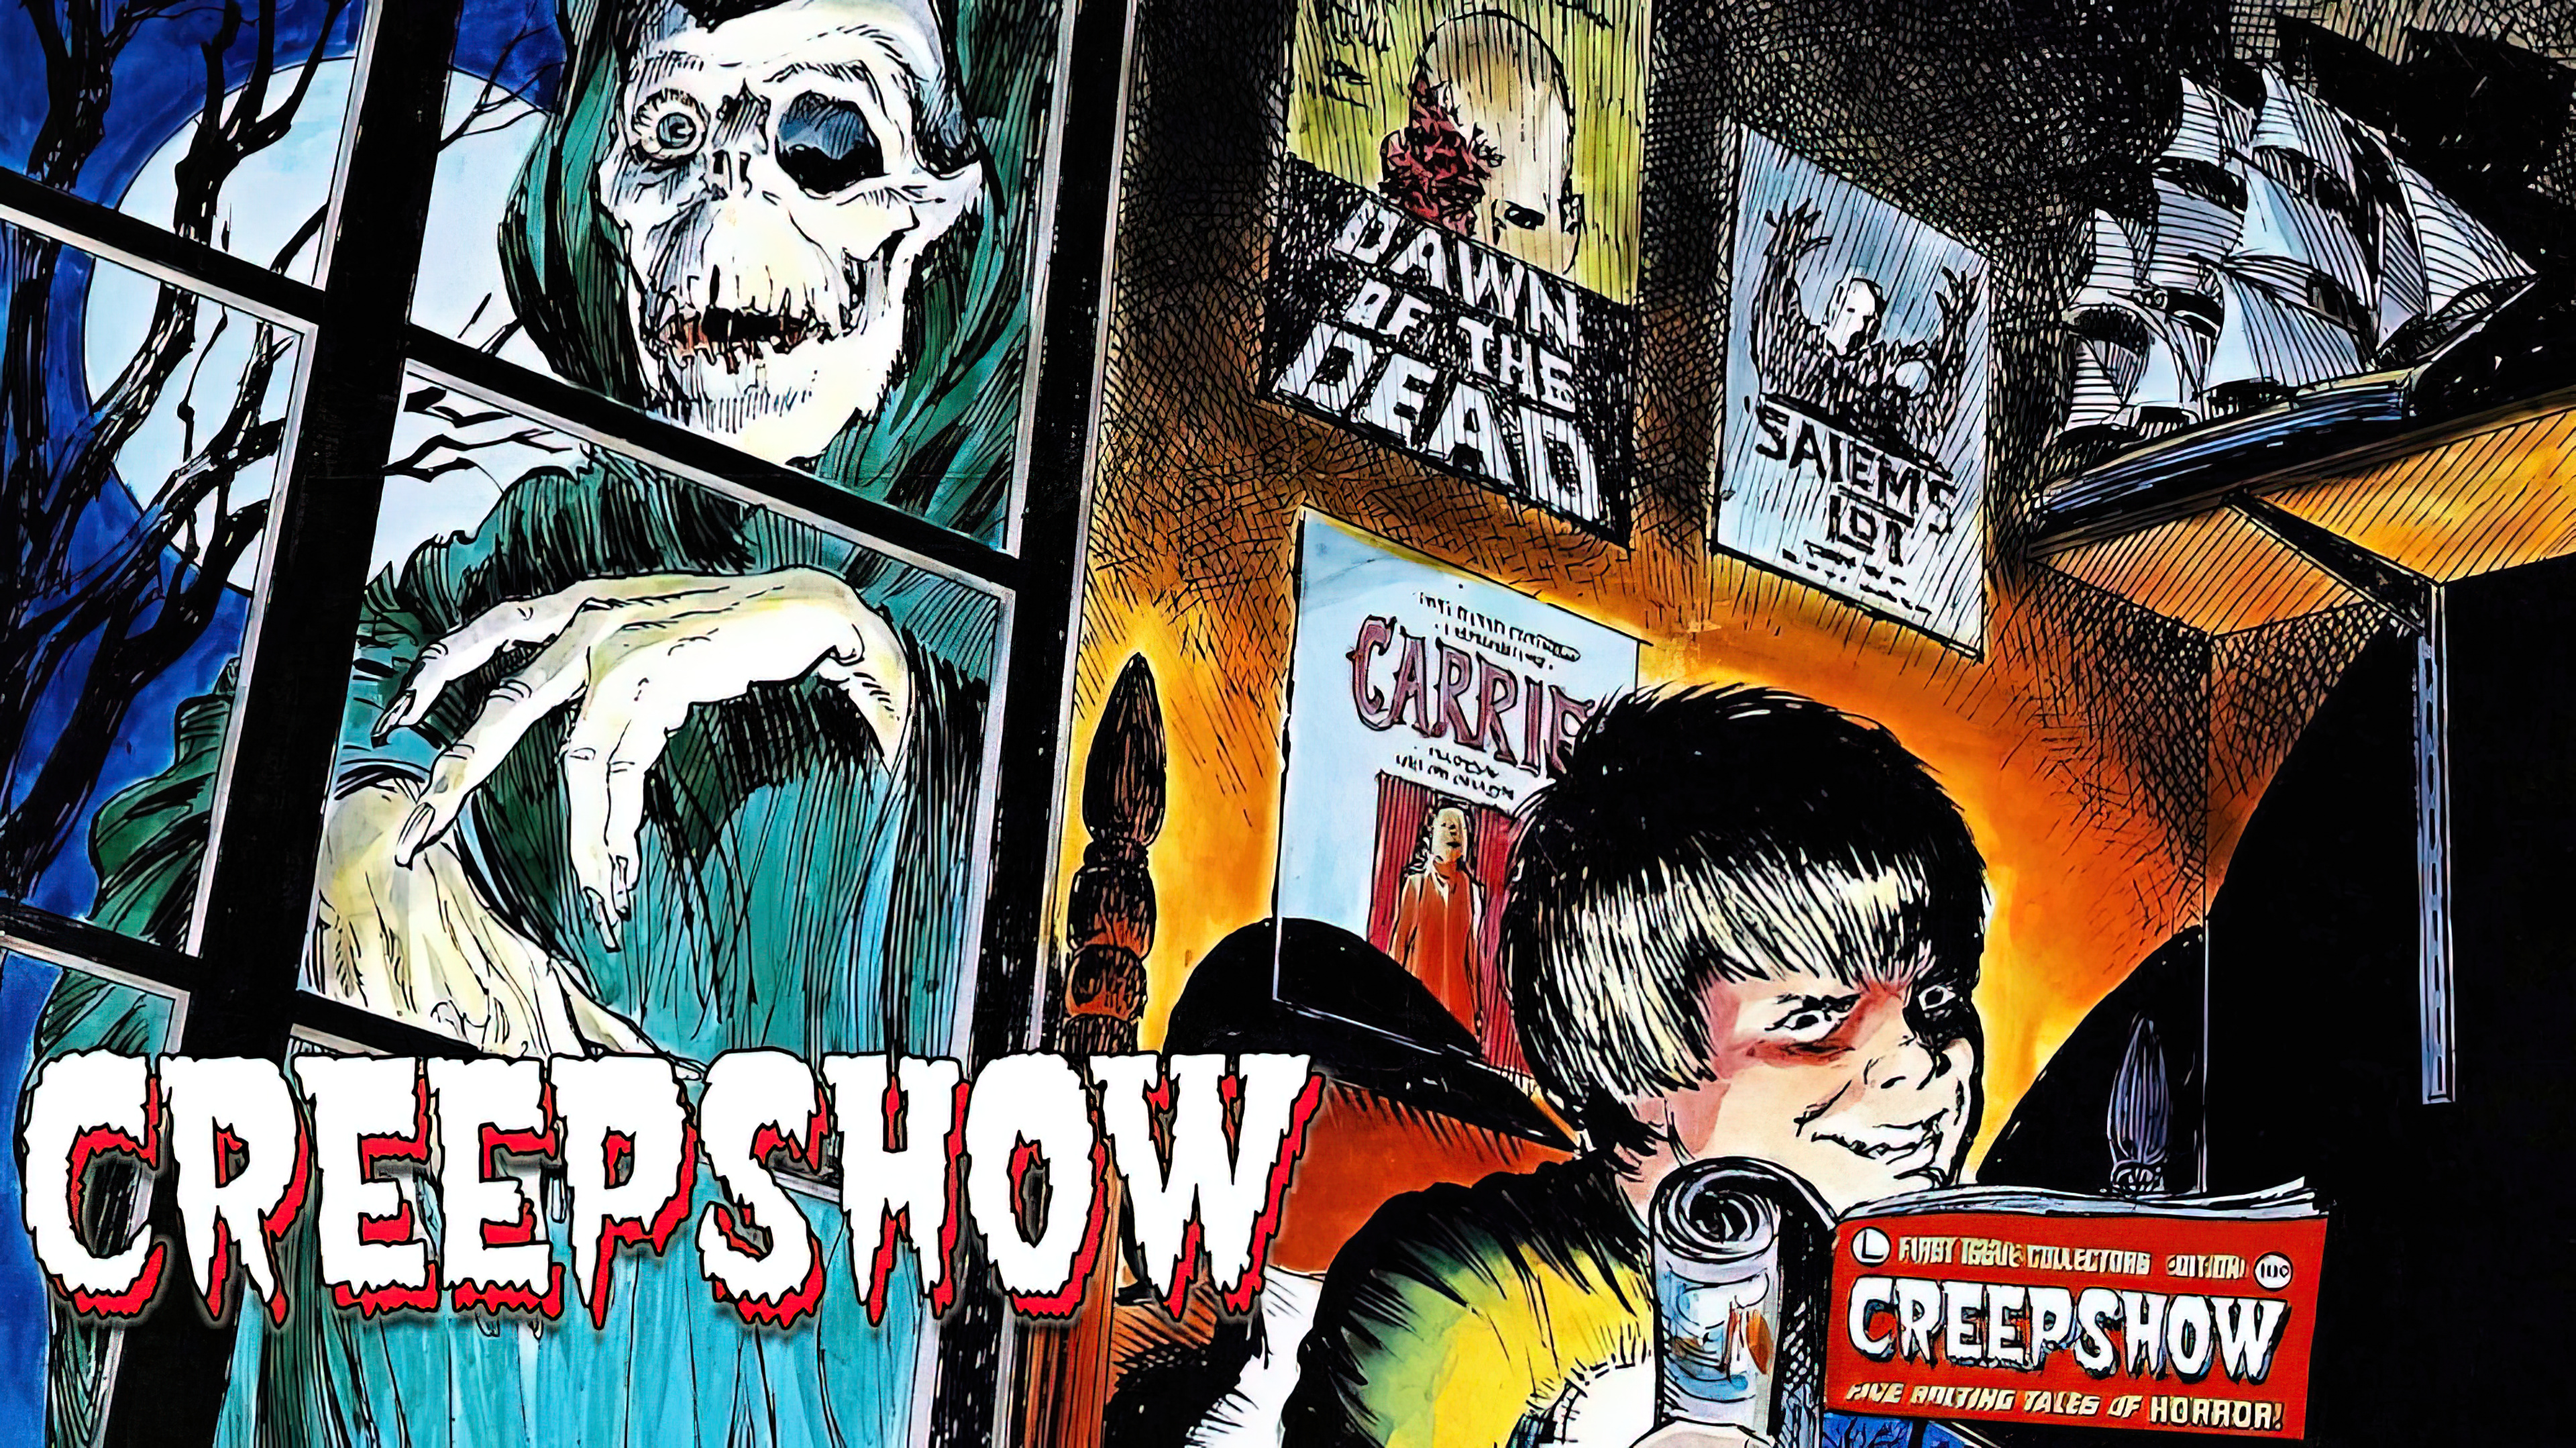 Creepshow (1987) โชว์มรณะ 